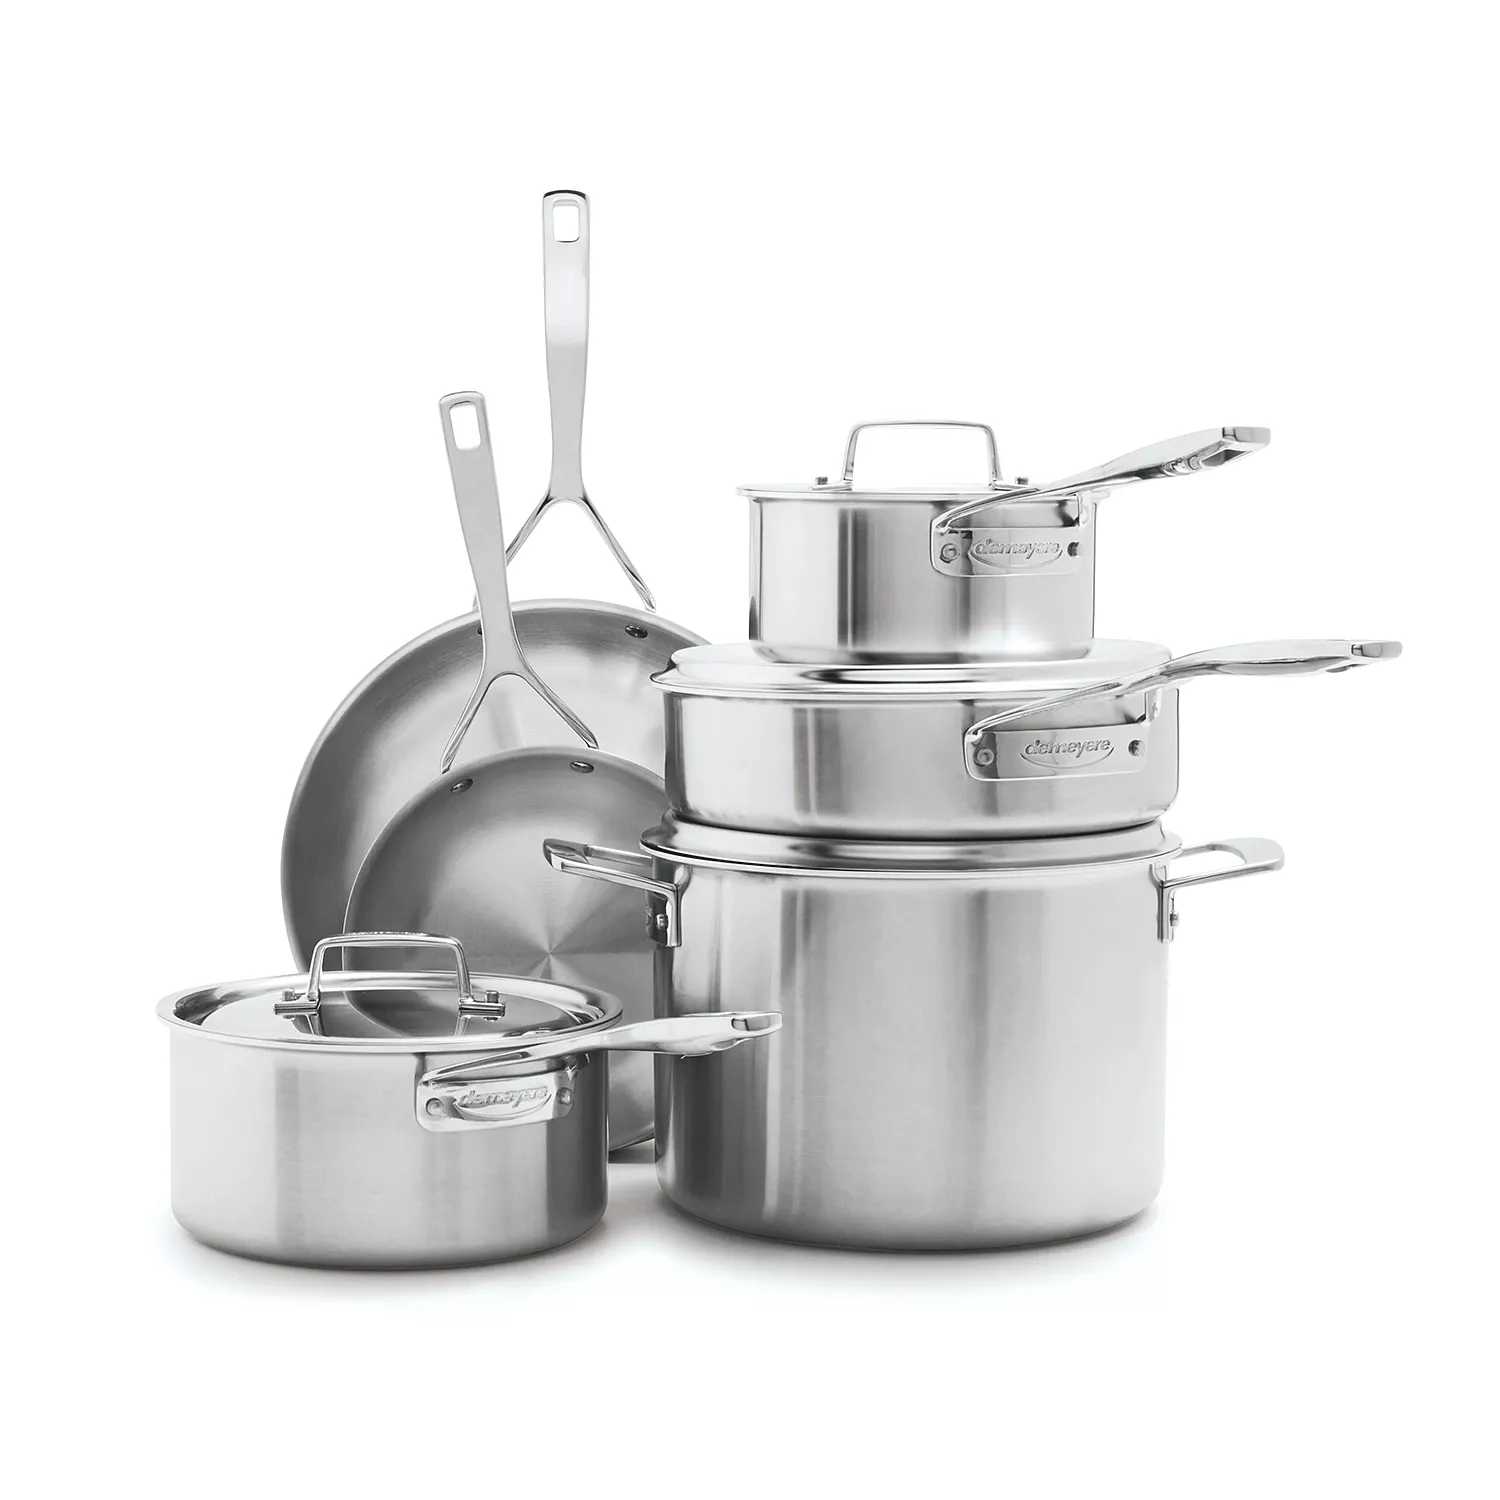 Demeyere Silver7 Stainless Steel 12-Piece Cookware Set